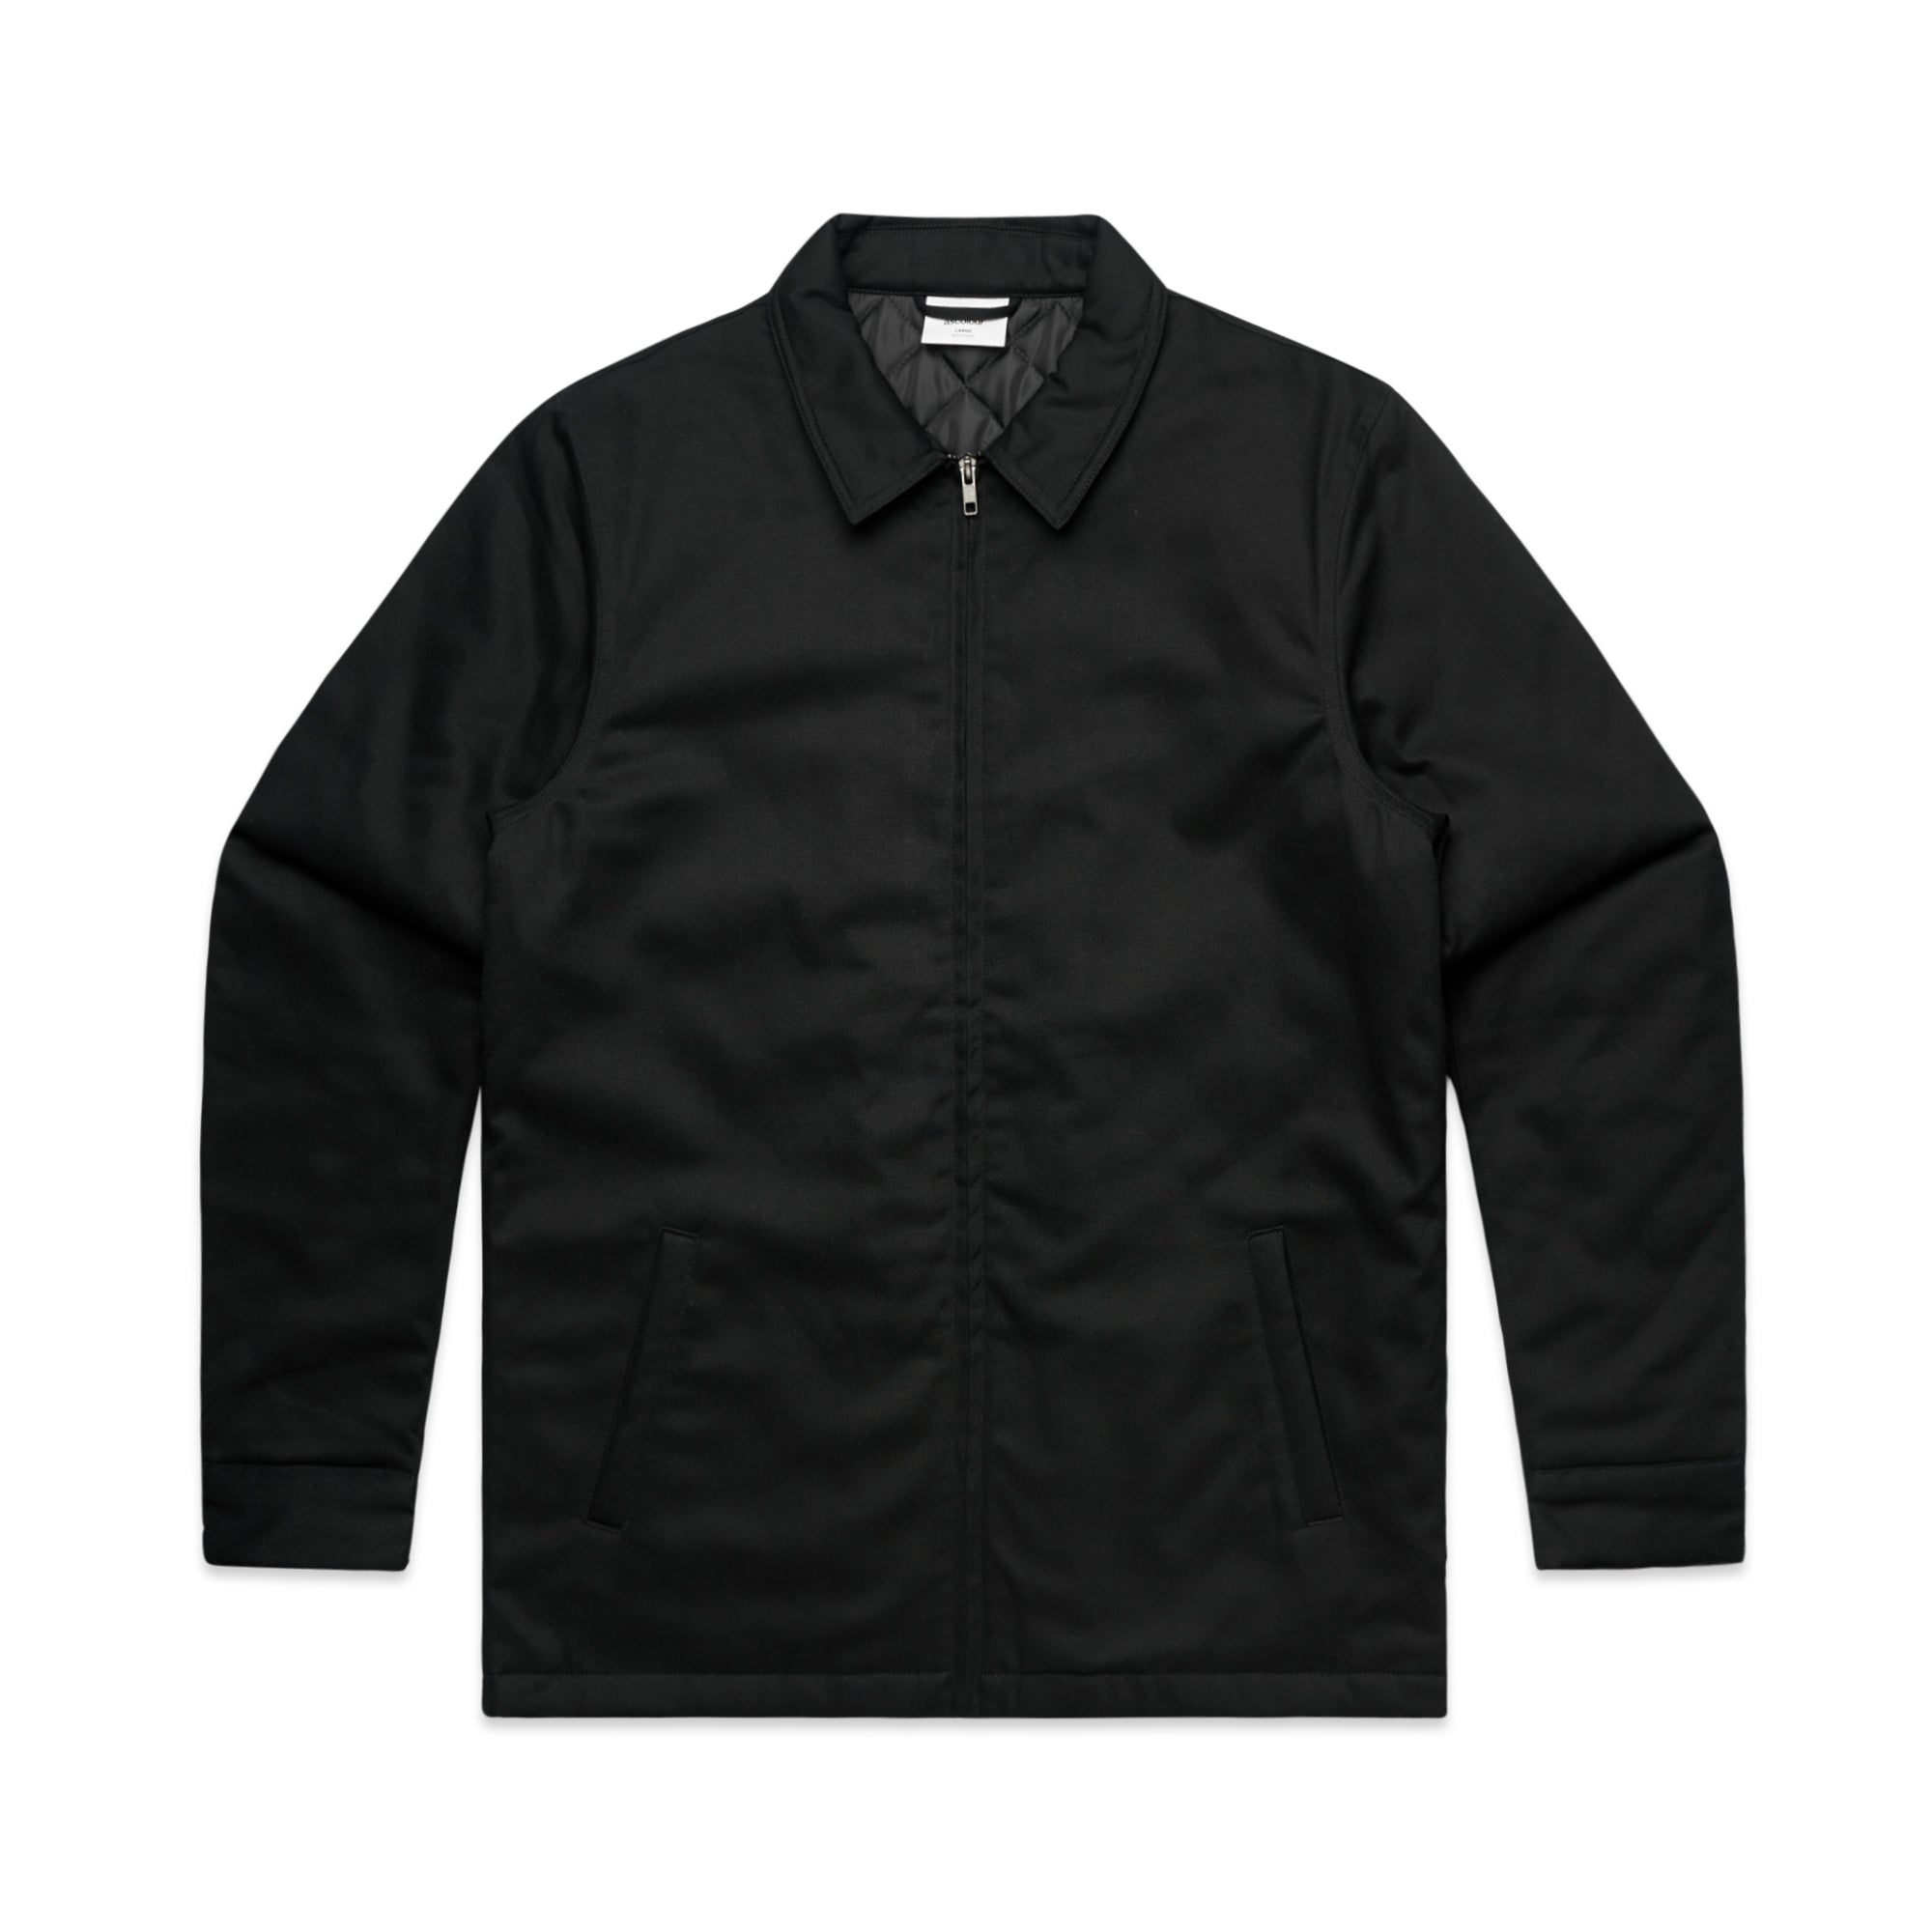 AS Colour | Men's Service Jacket - Custom Clothing | T Shirt Printing | Embroidery | Screen Printing | Print Room NZ